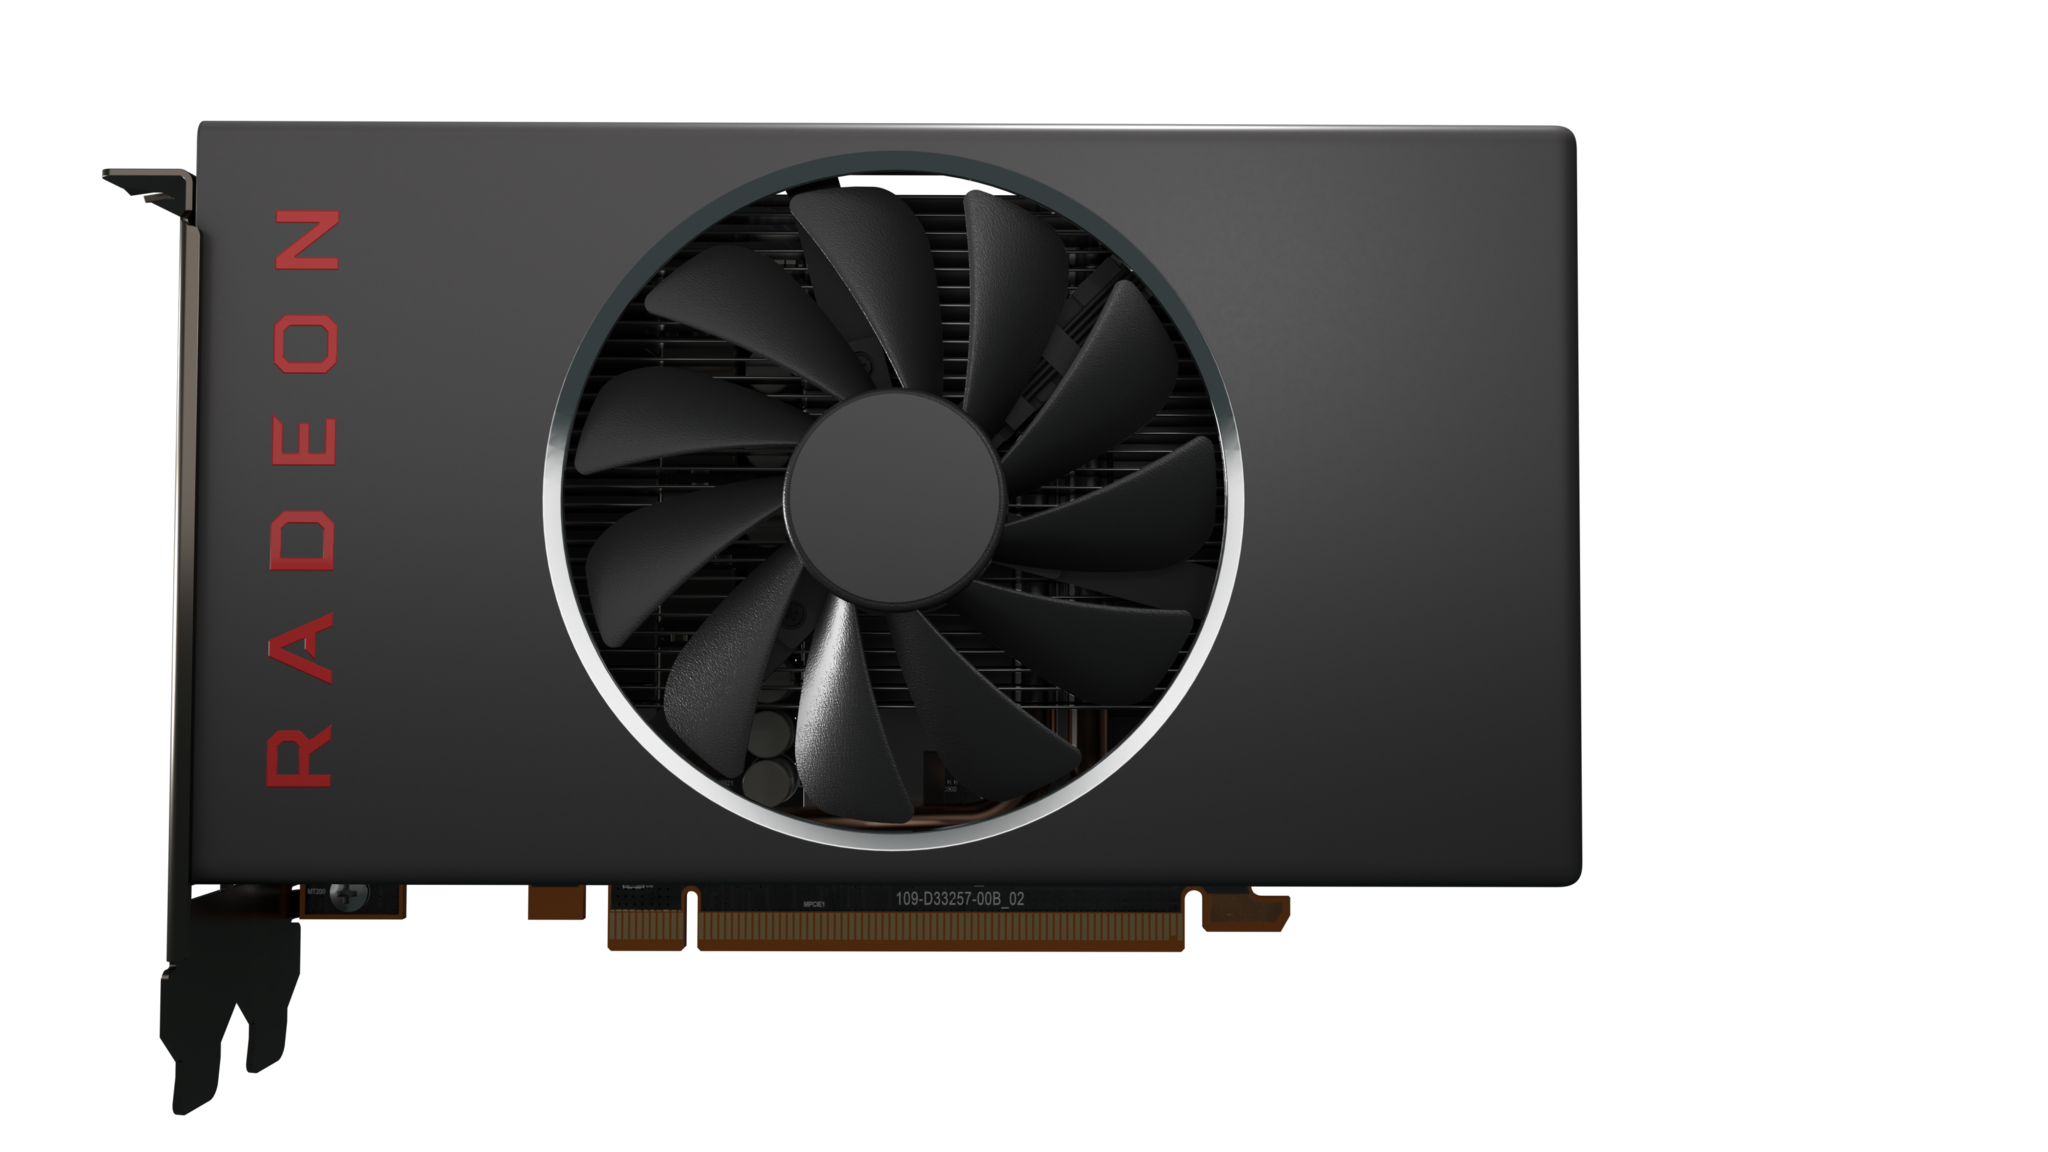 AMD เปิดตัวกราฟิกการ์ด Radeon™ RX 5500 Series: ความคมชัดของภาพที่เหนือกว่า ฟีเจอร์การทำงานชั้นเยี่ยม และประสบการณ์การเล่นเกมประสิทธิภาพสูง